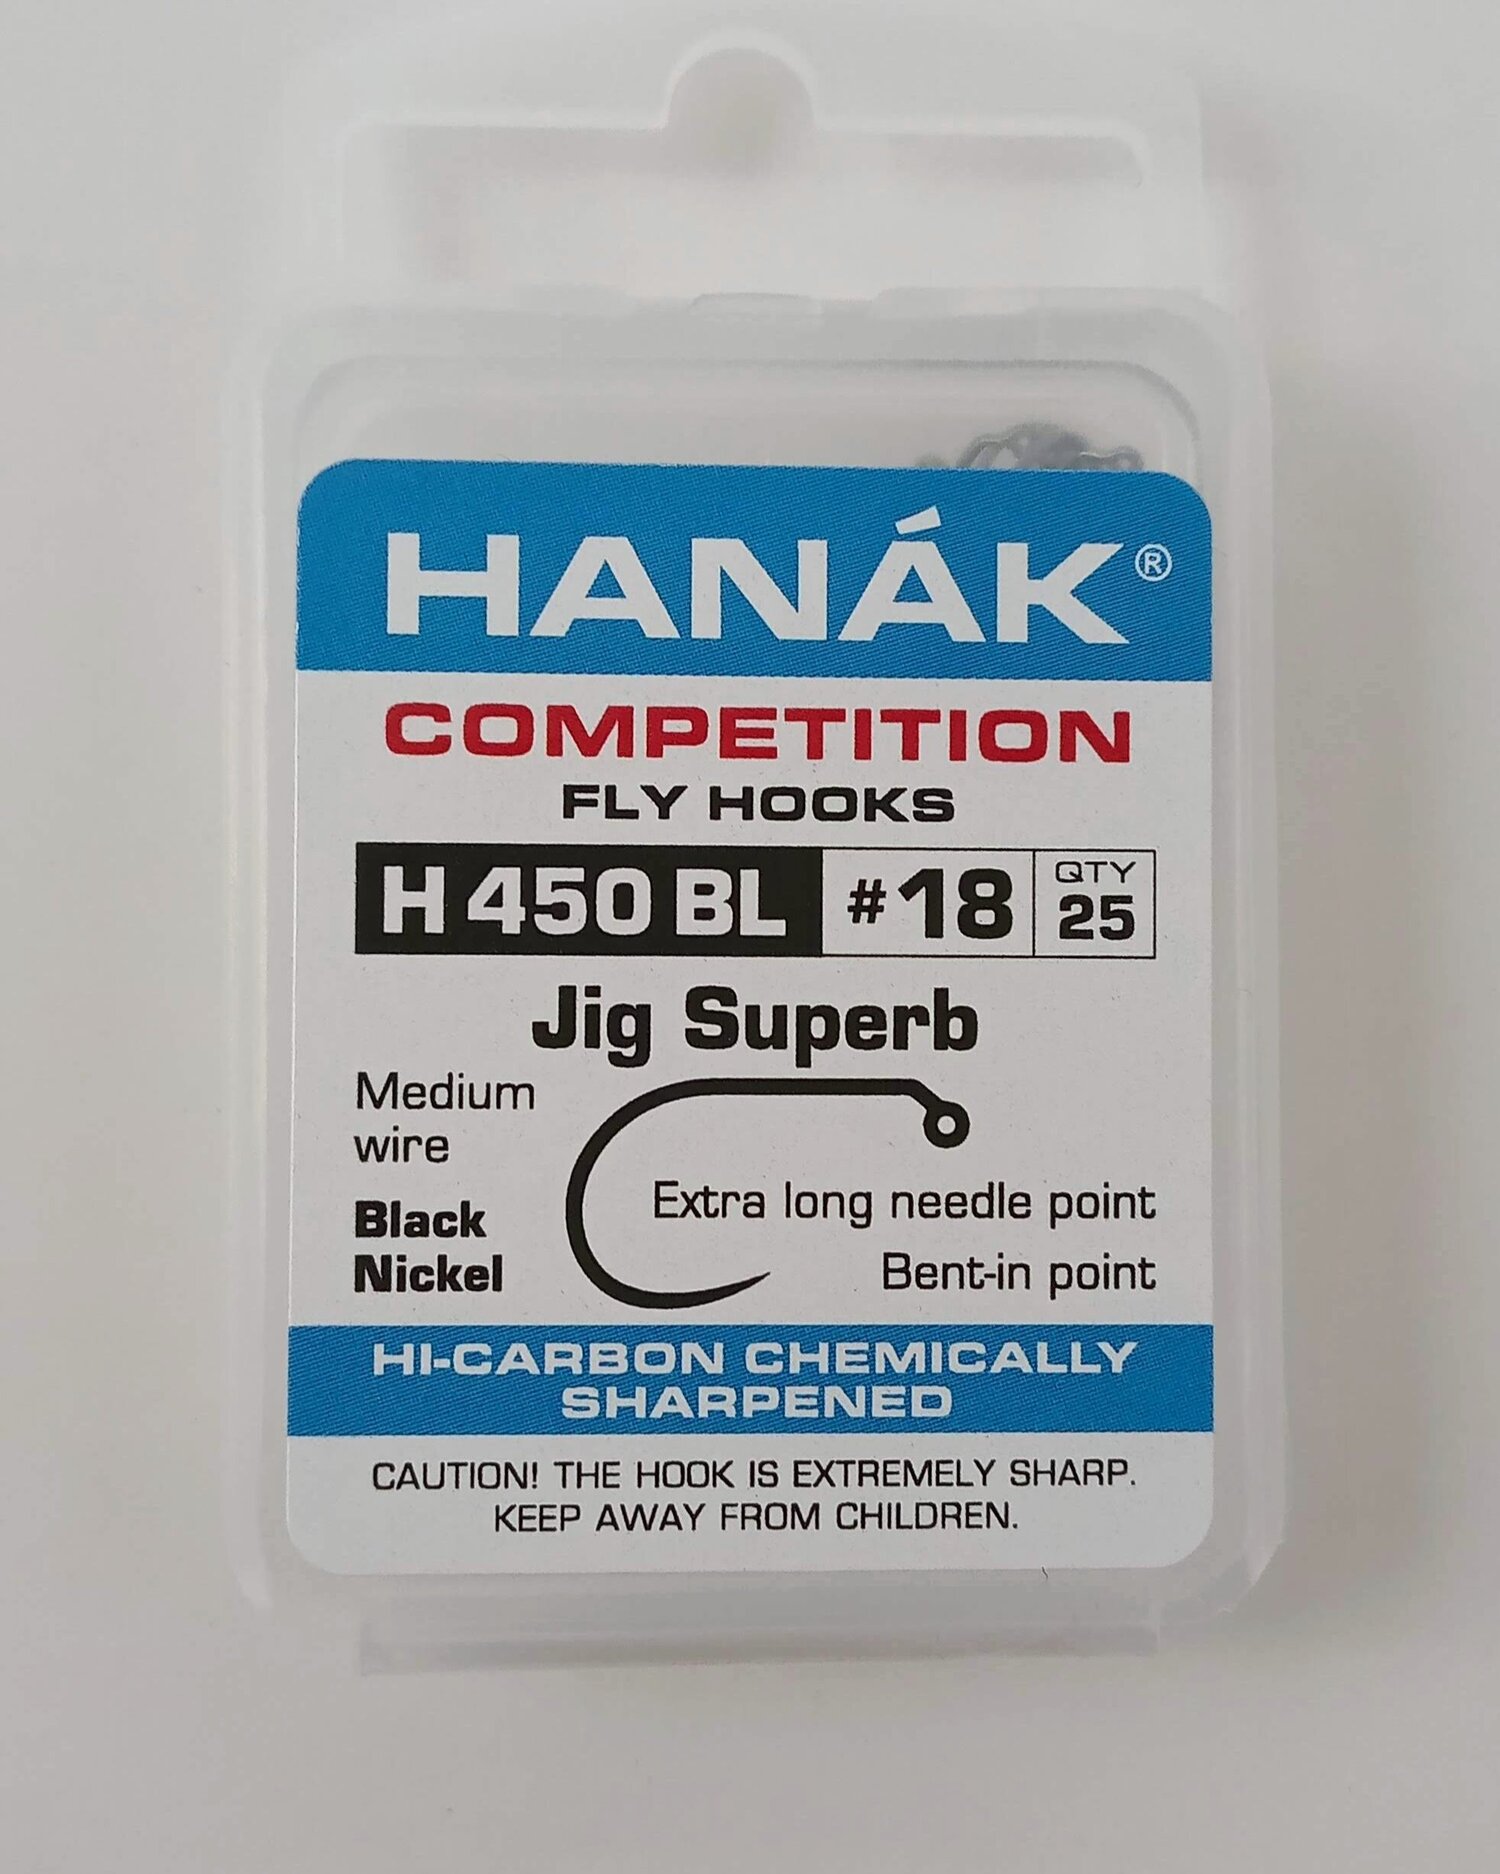 Hanak H 450 BL Jig Superb Hook | Spring Creek Fly Fishing